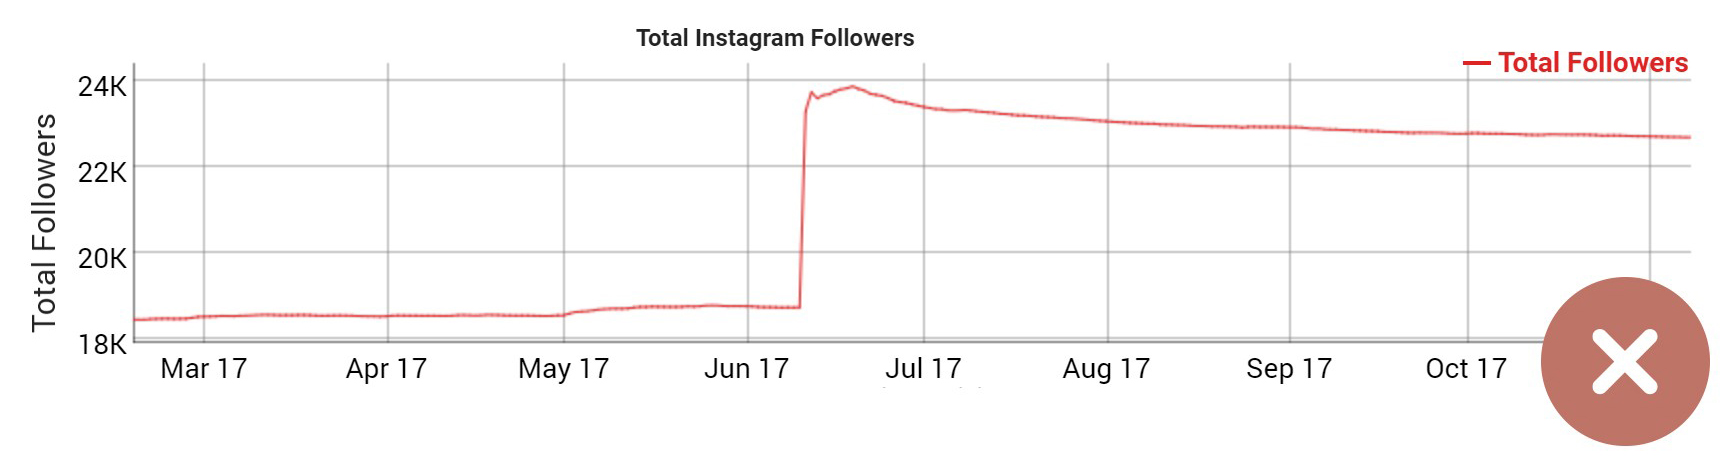 Bad followers curve